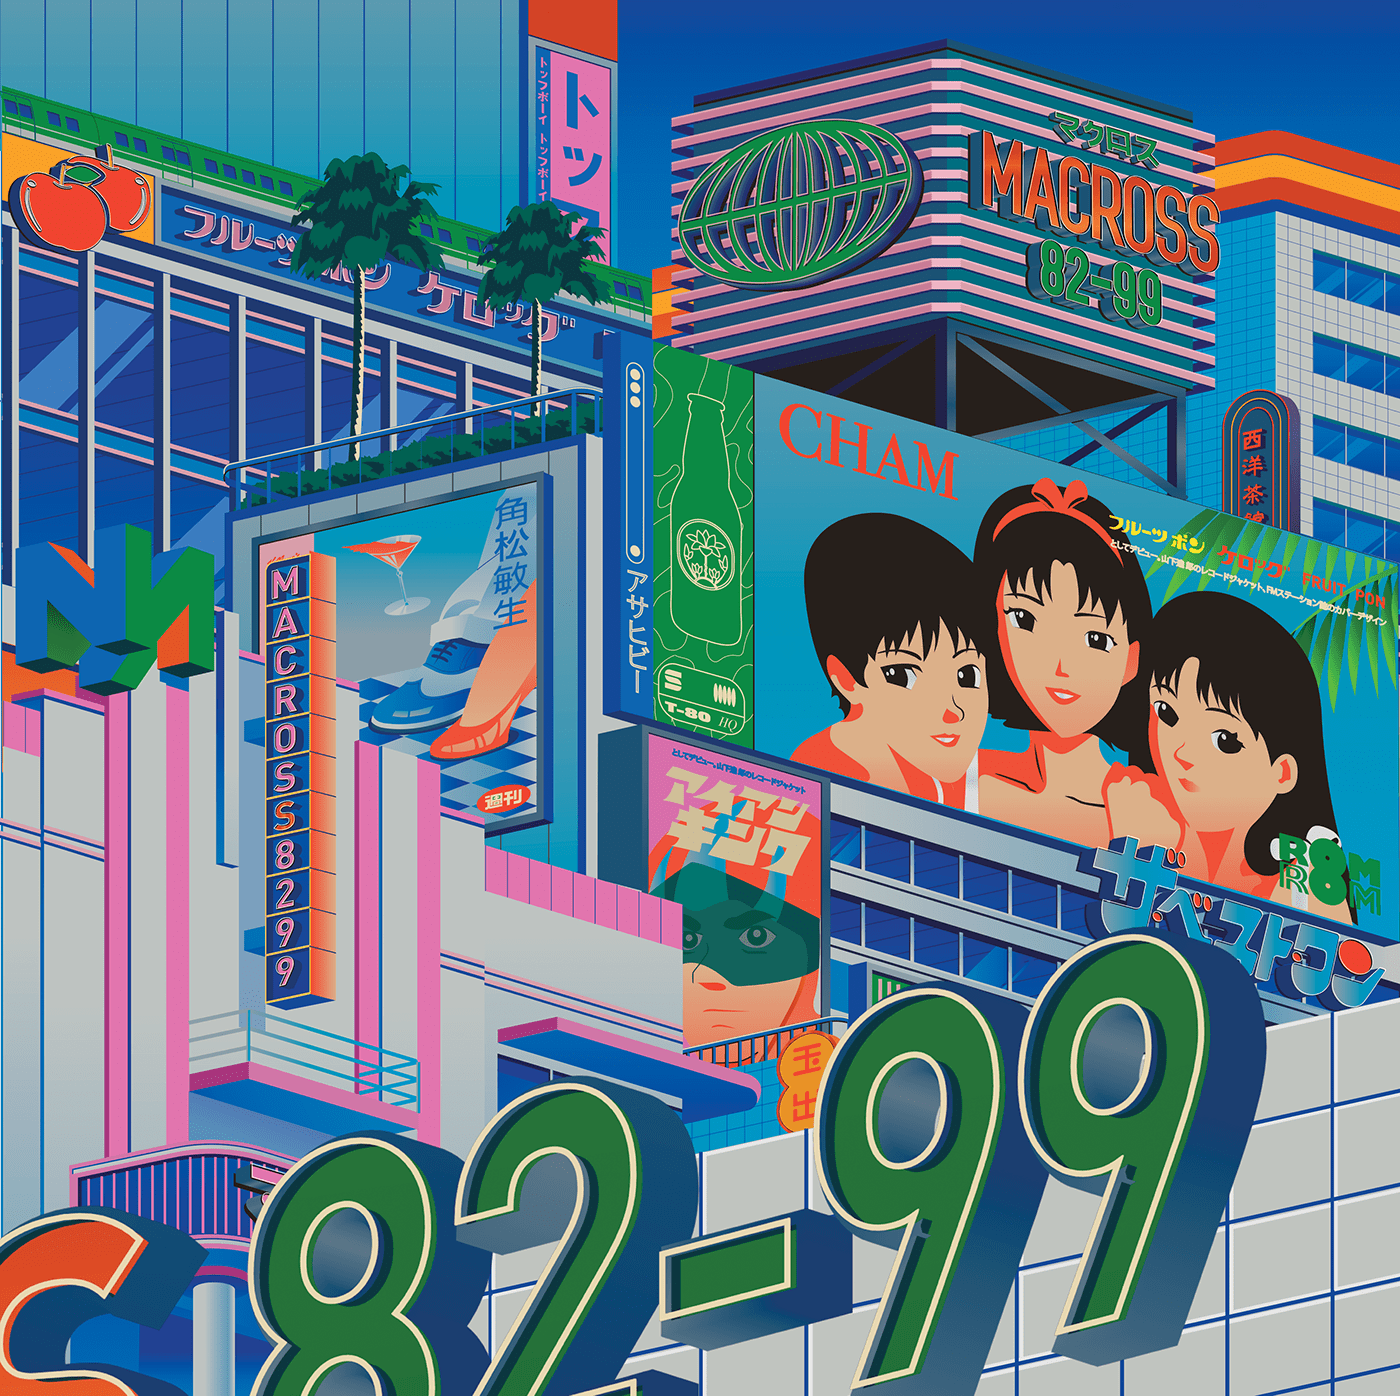 MAcross PERFECTBLUE vaporwave citypop 80's anime Ardhiraputra cham japan